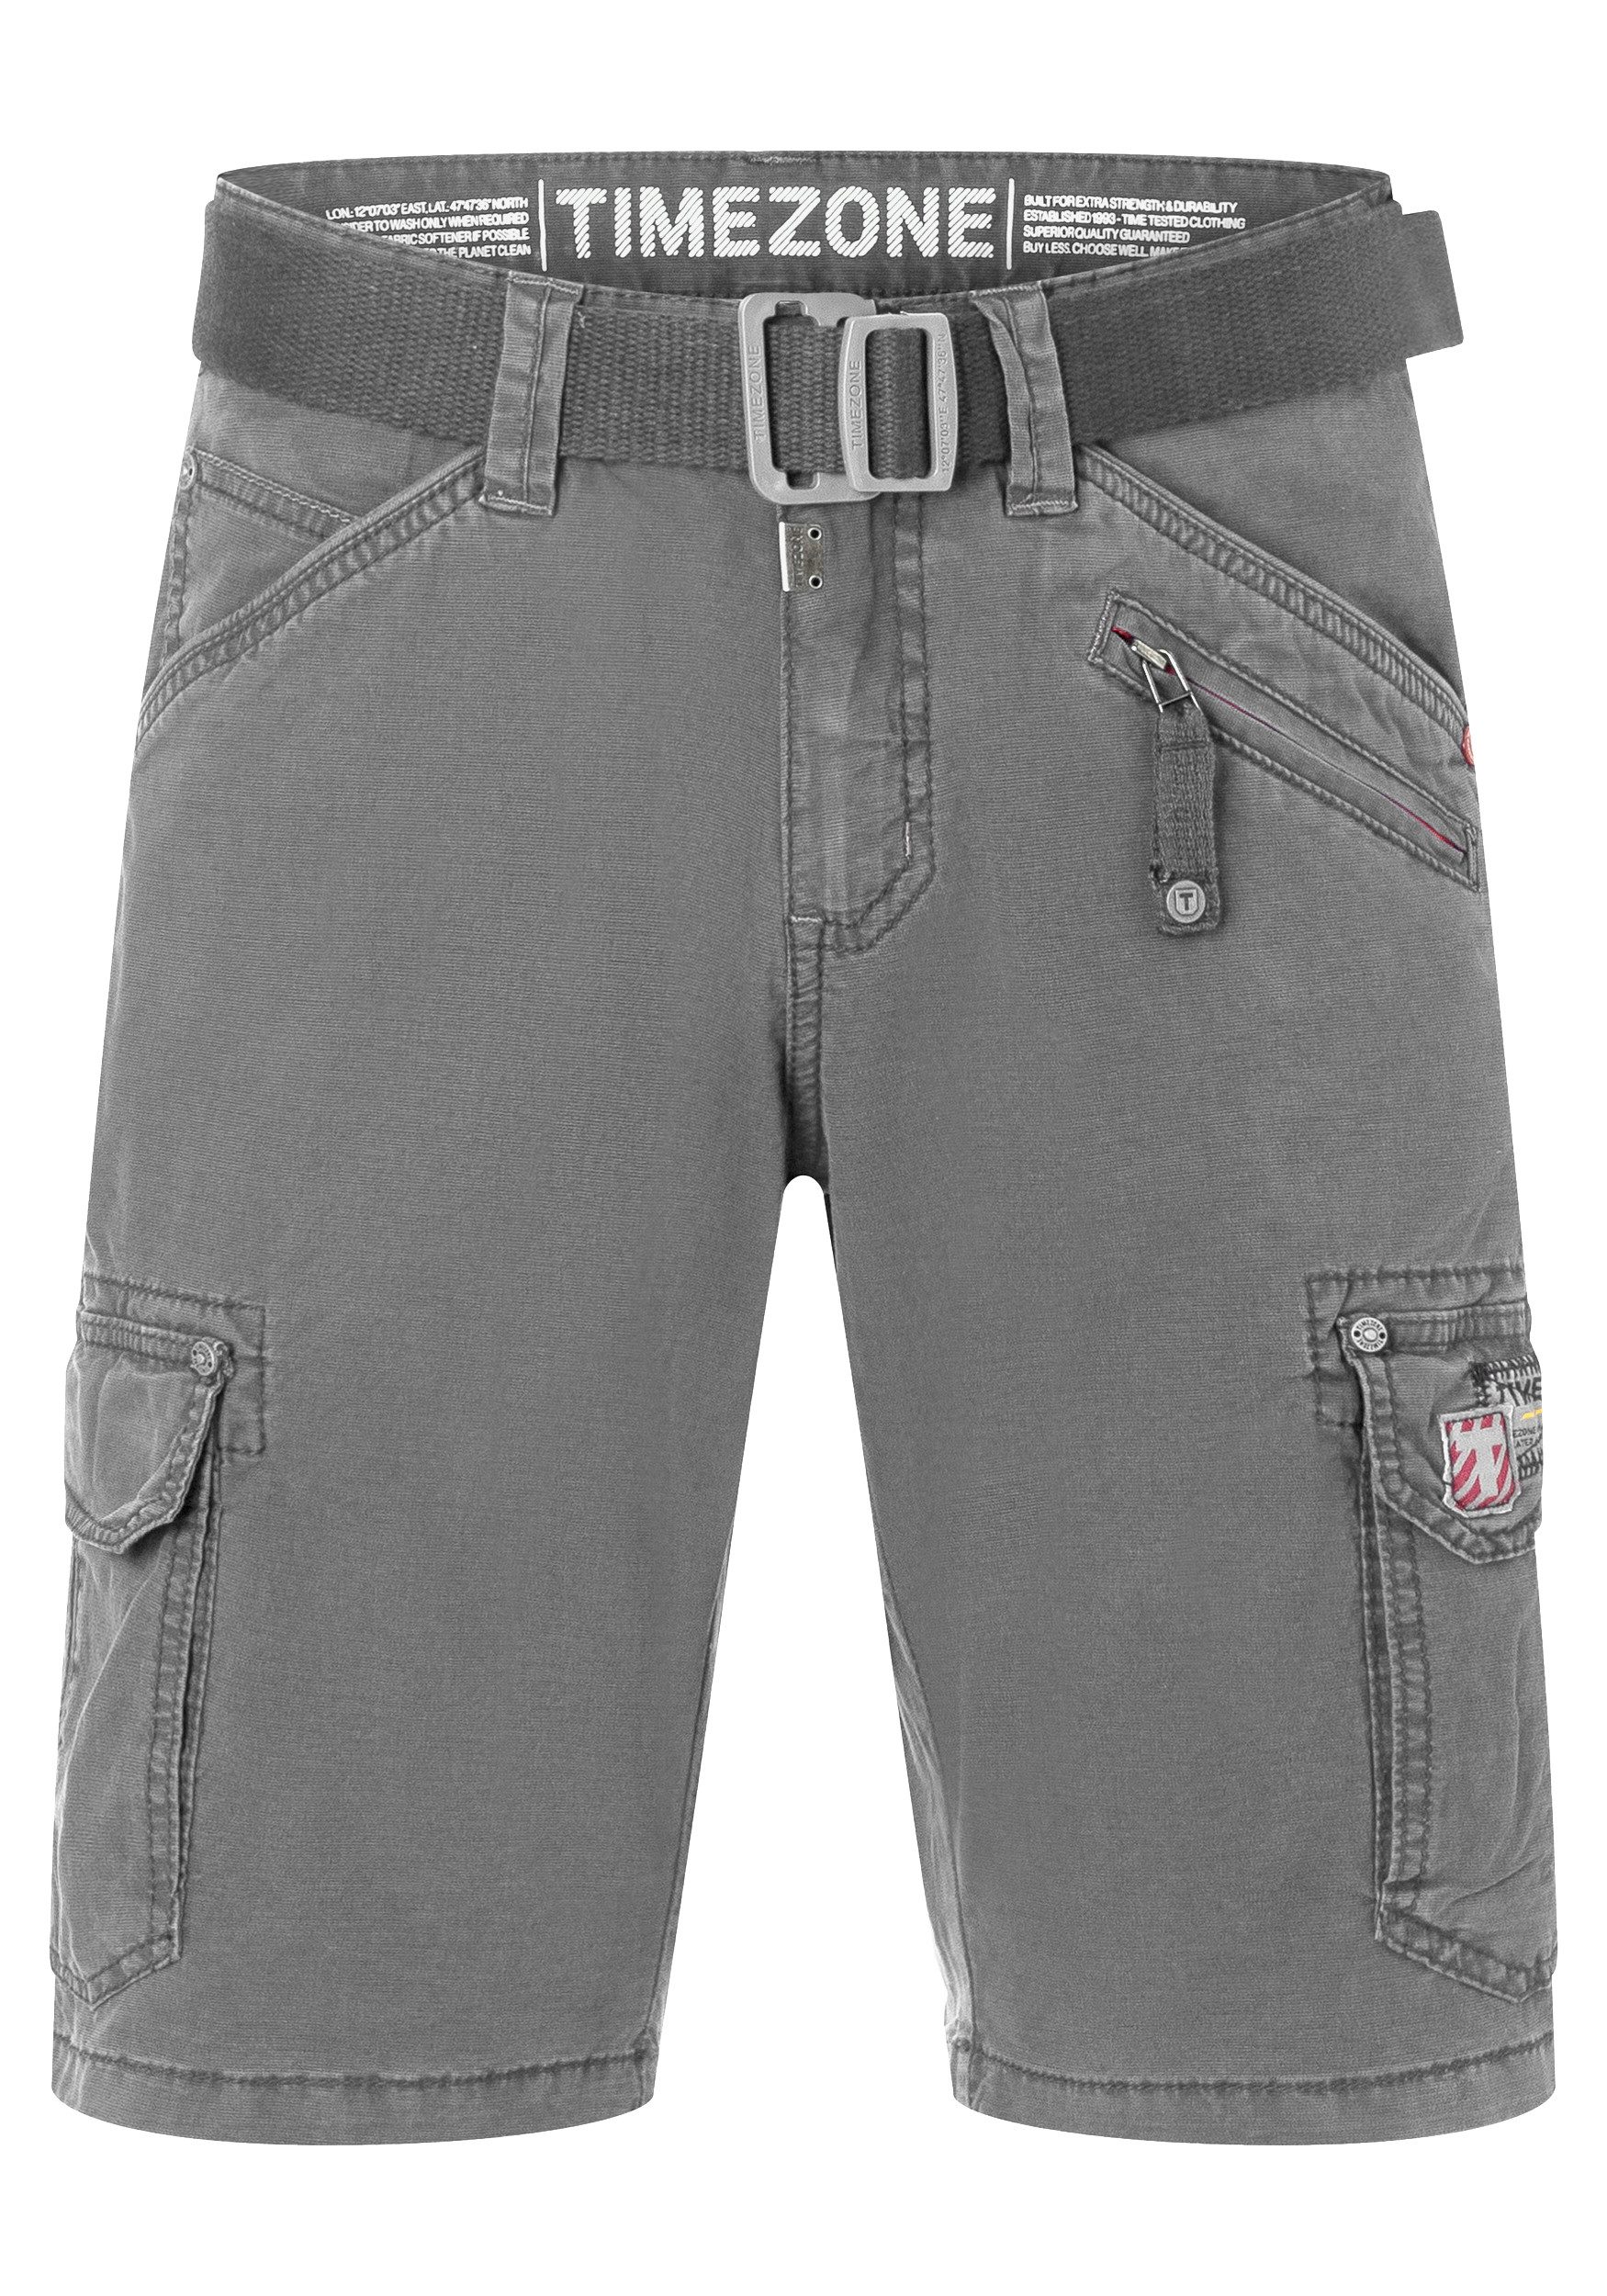 TIMEZONE Cargoshorts Shorts Kurze Cargo Hose Regular Mid Waist Pants 7311 in Grau